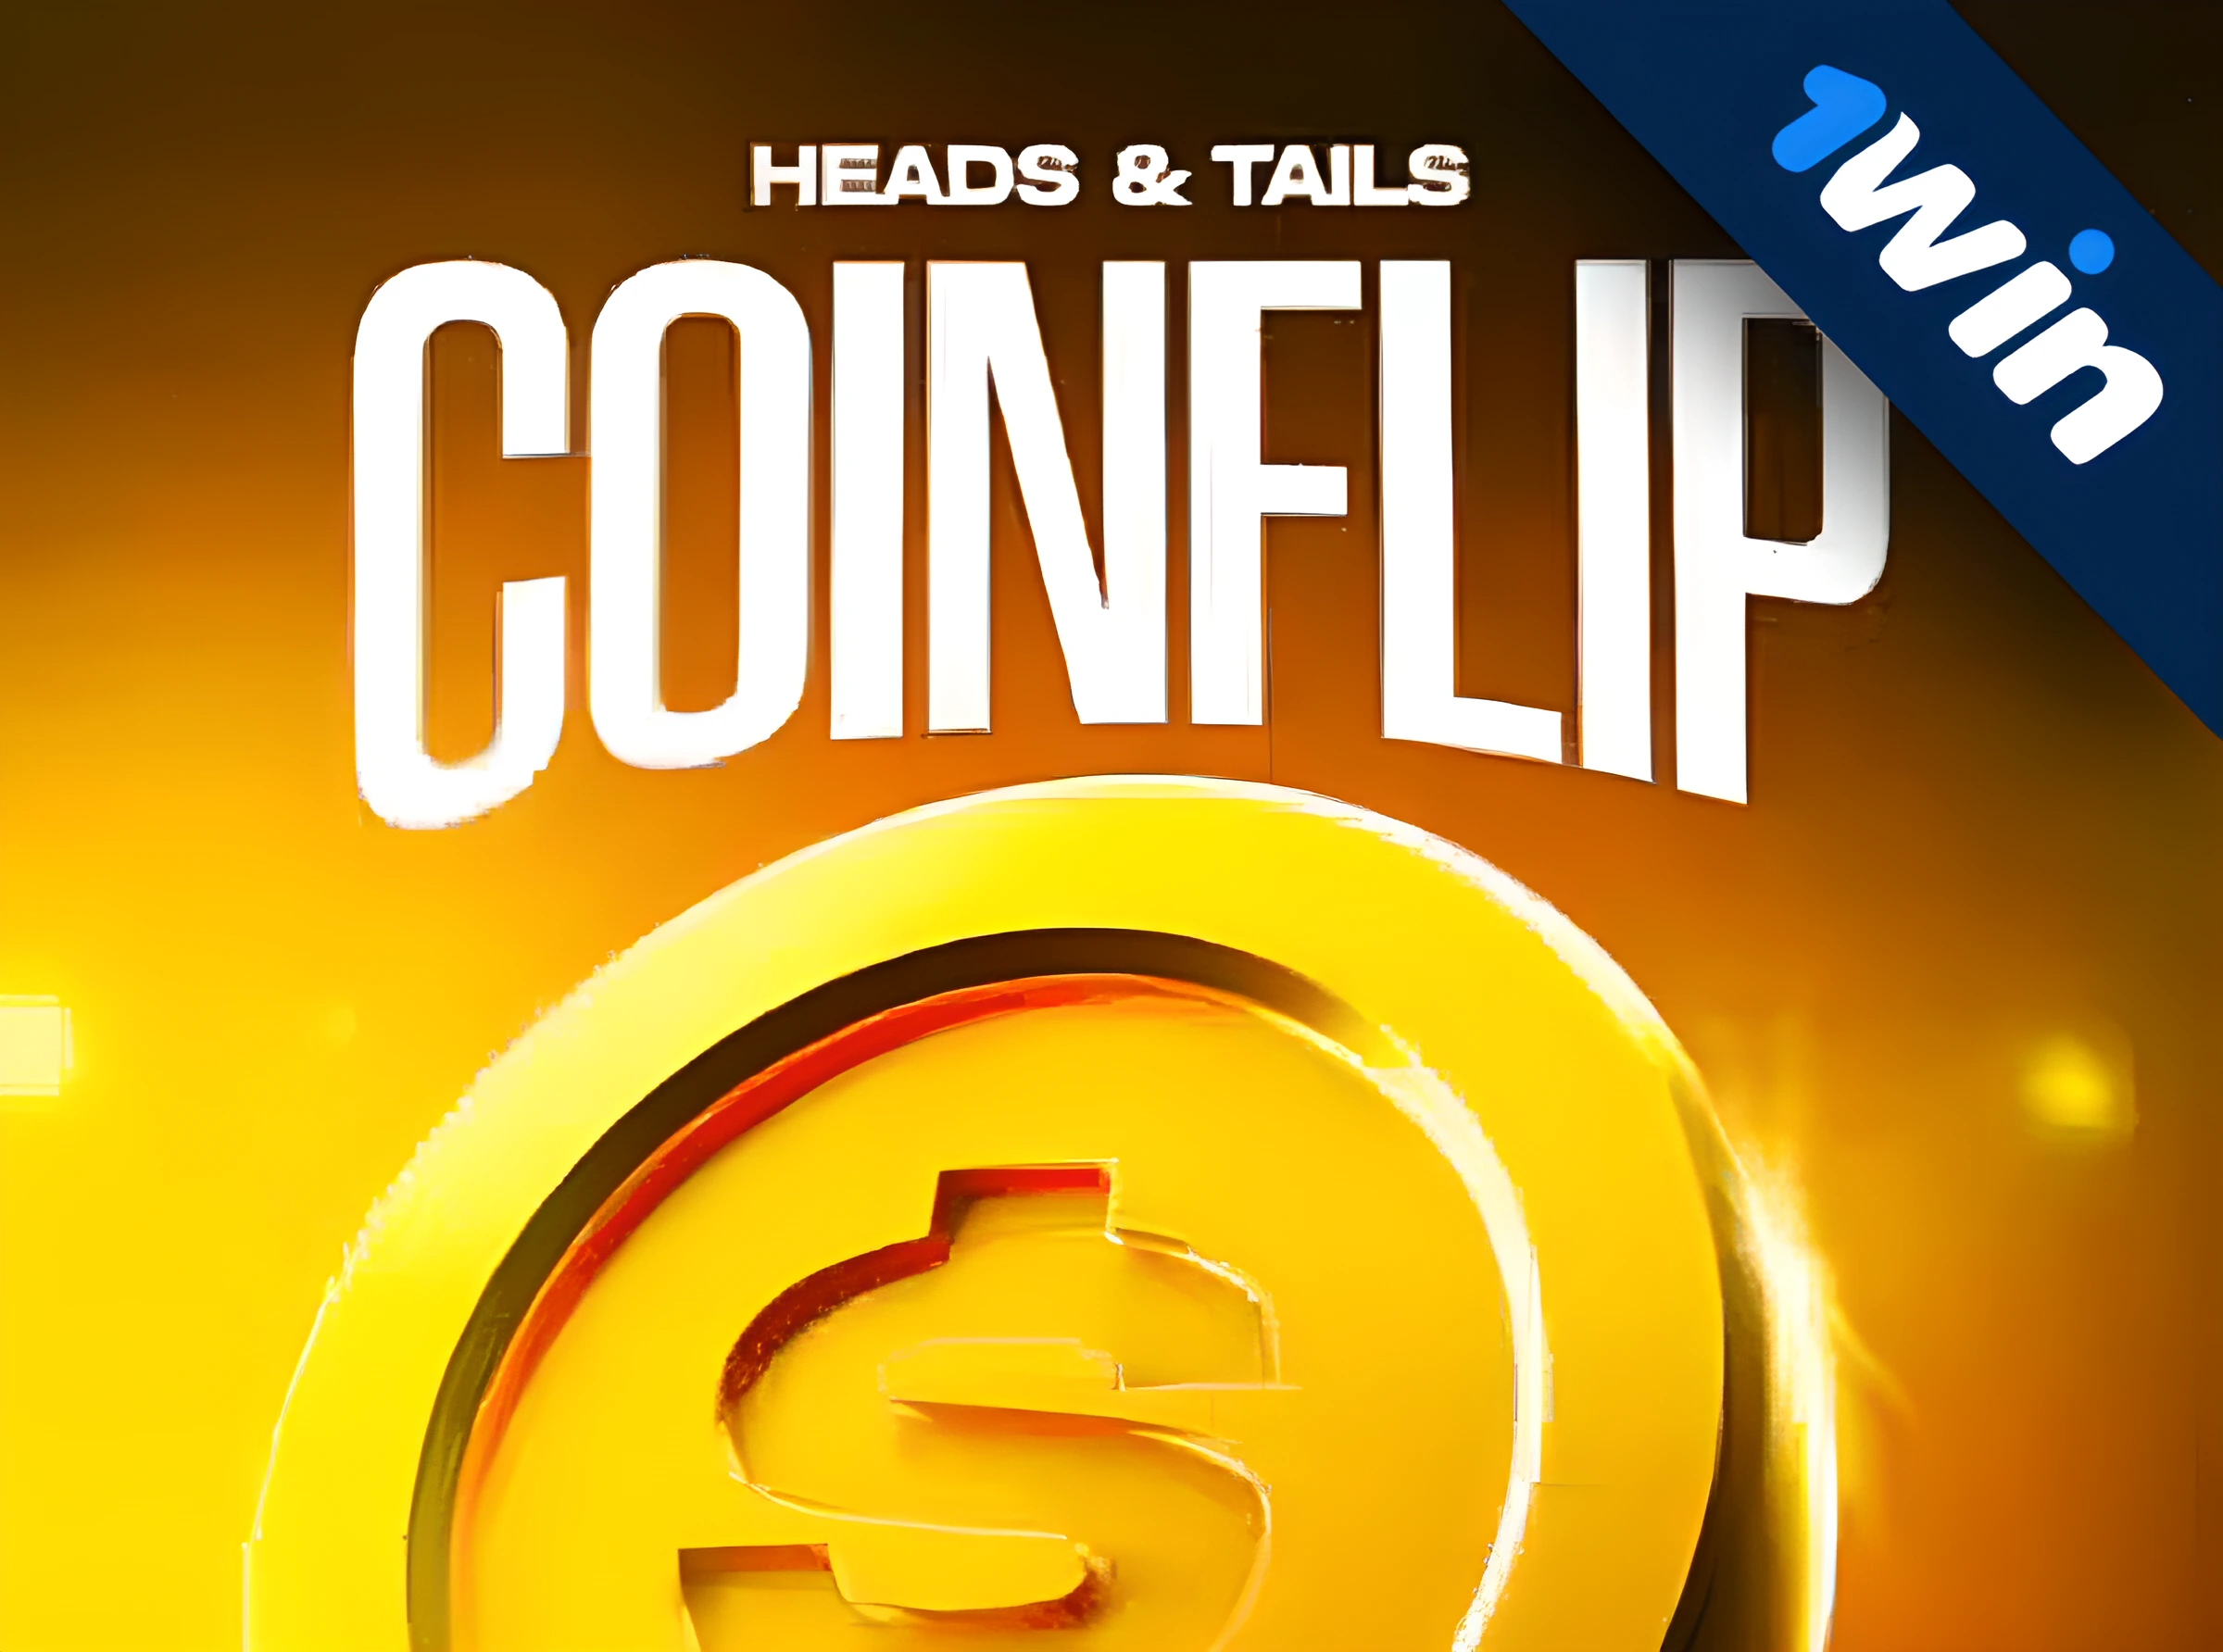 Coin Flip - 1 win рдбрд╛рдЙрдирд▓реЛрдб рдХрд░реЗрдВ